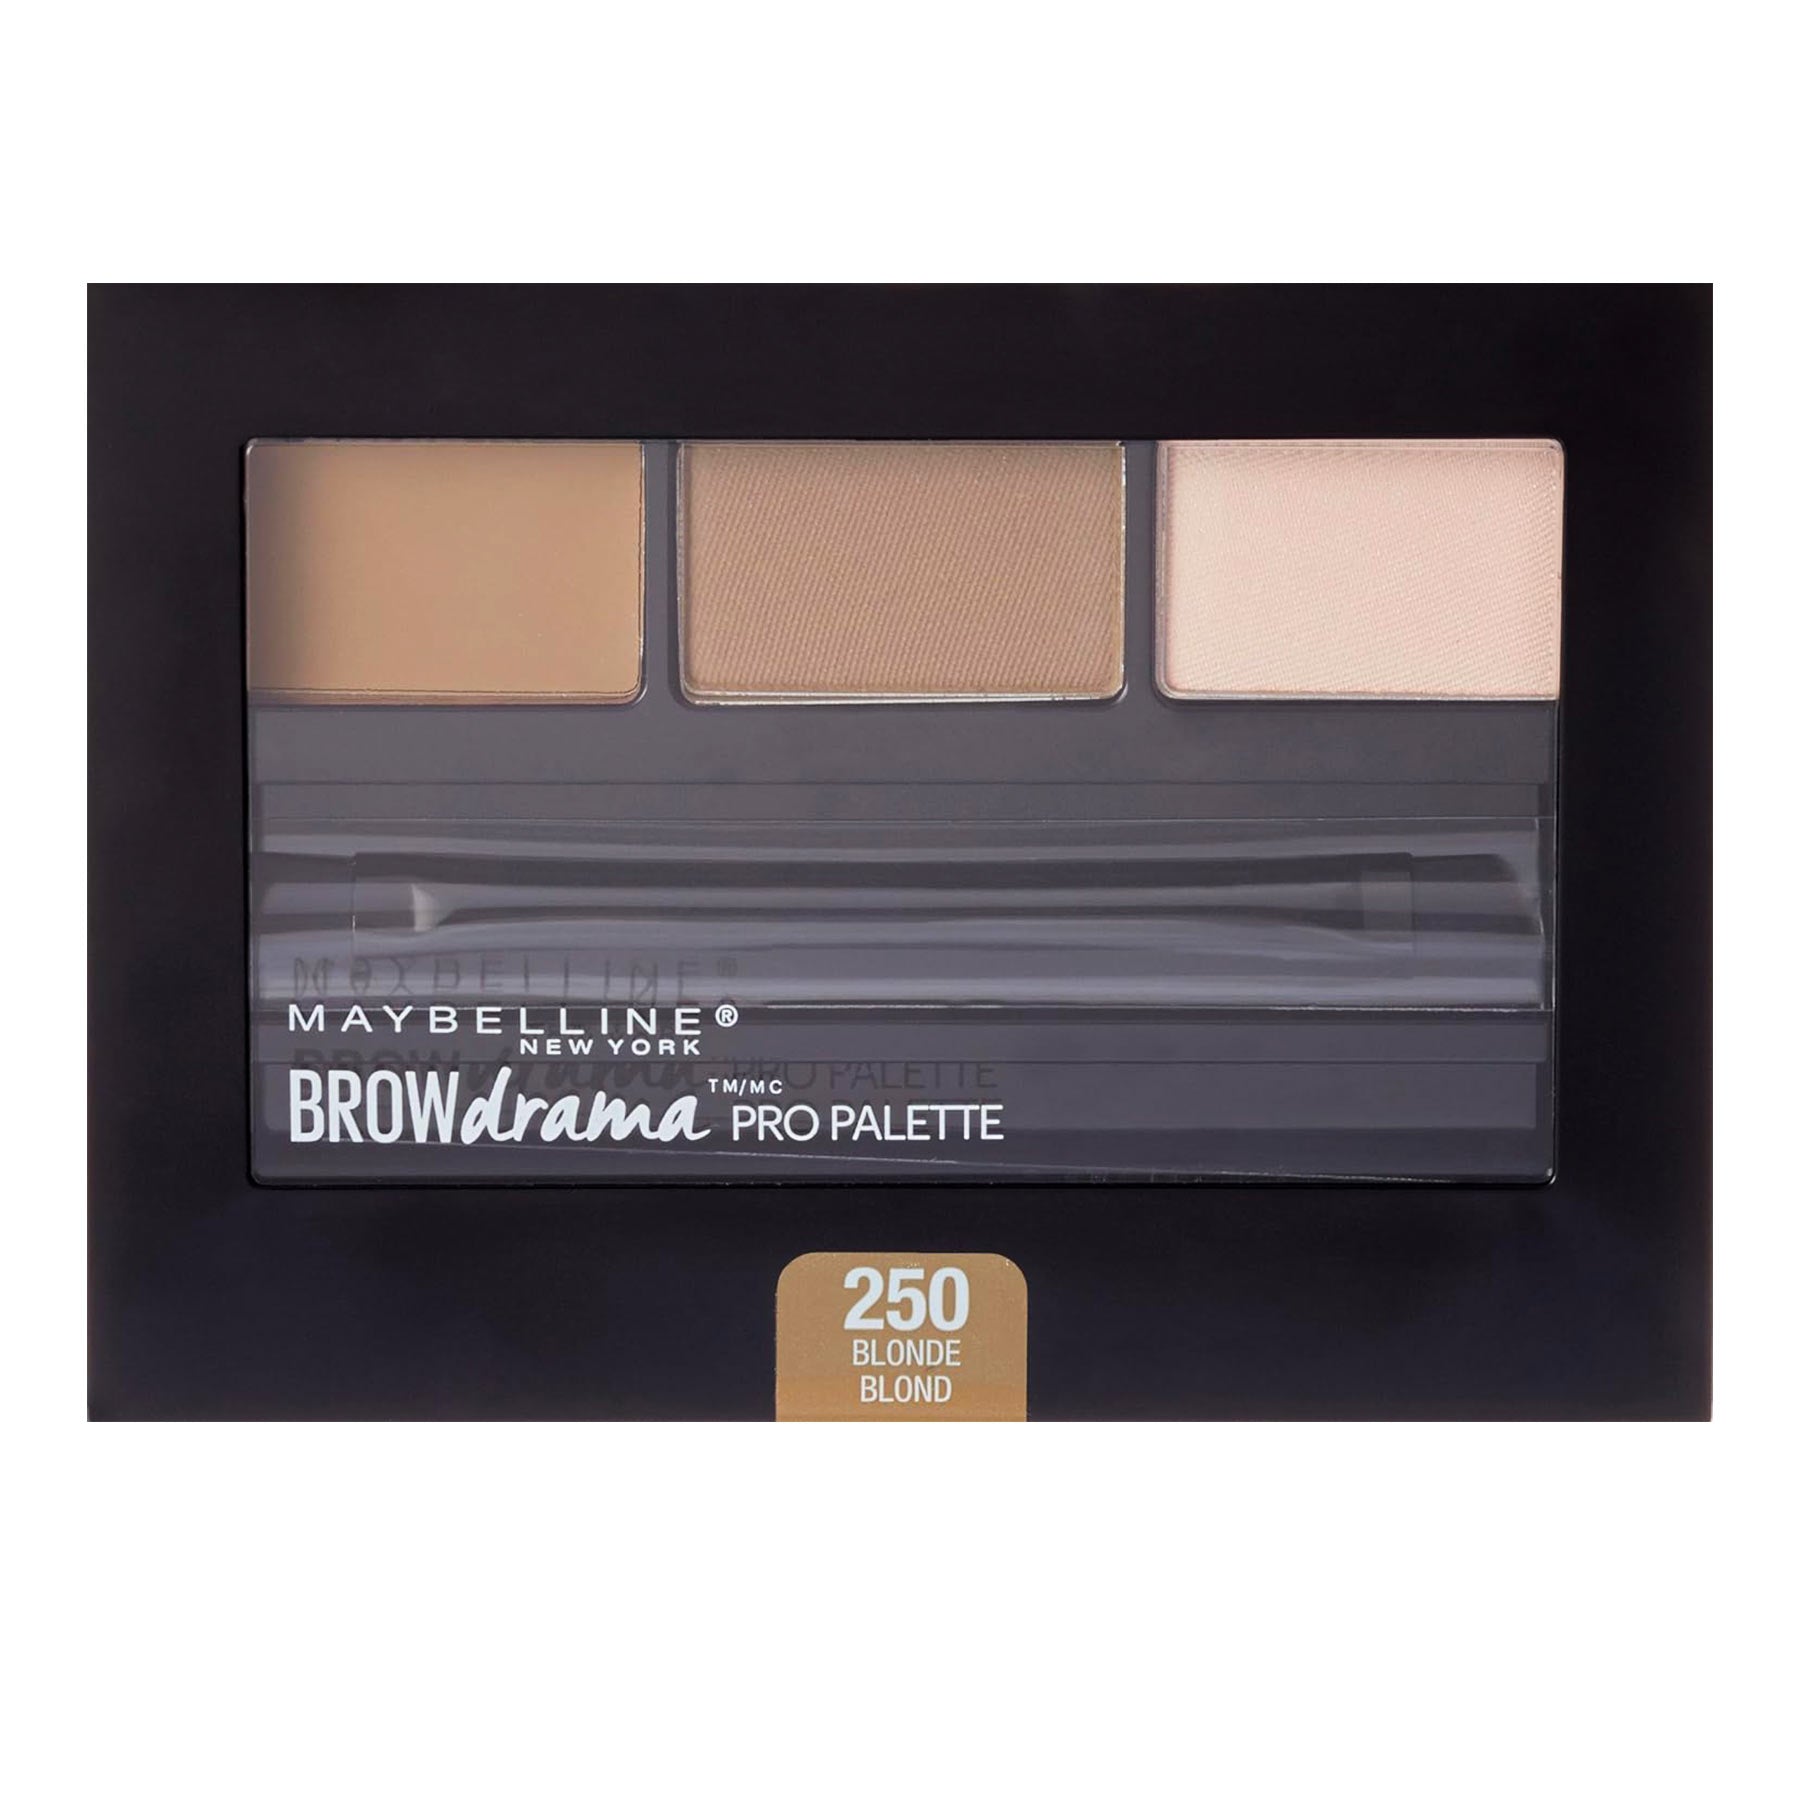 Maybelline Brow Drama Pro Palette Blonde SL. Tarnished Eye Shadow Makeup